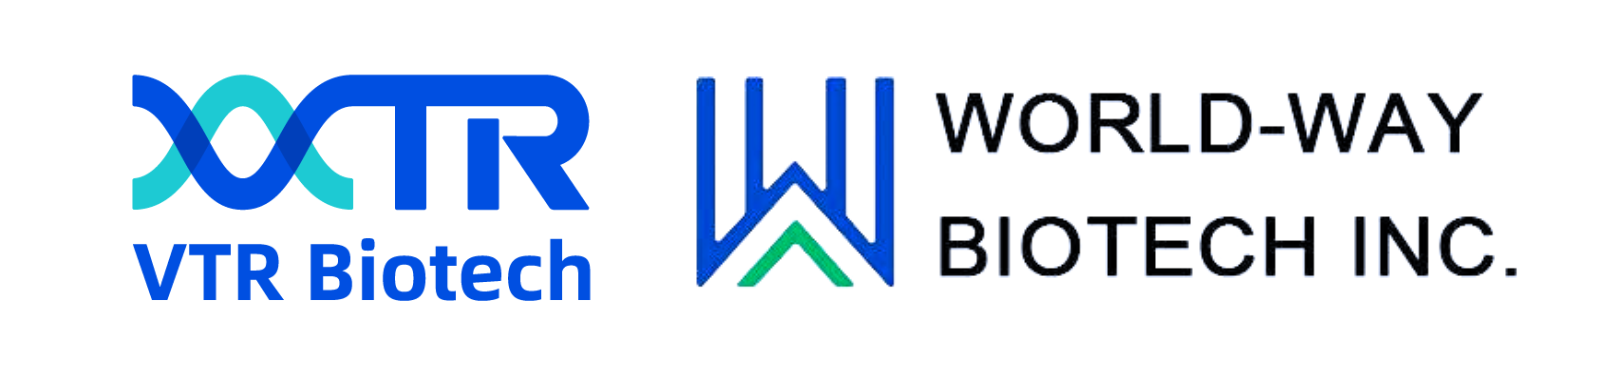 World-way-Biotech-Inc